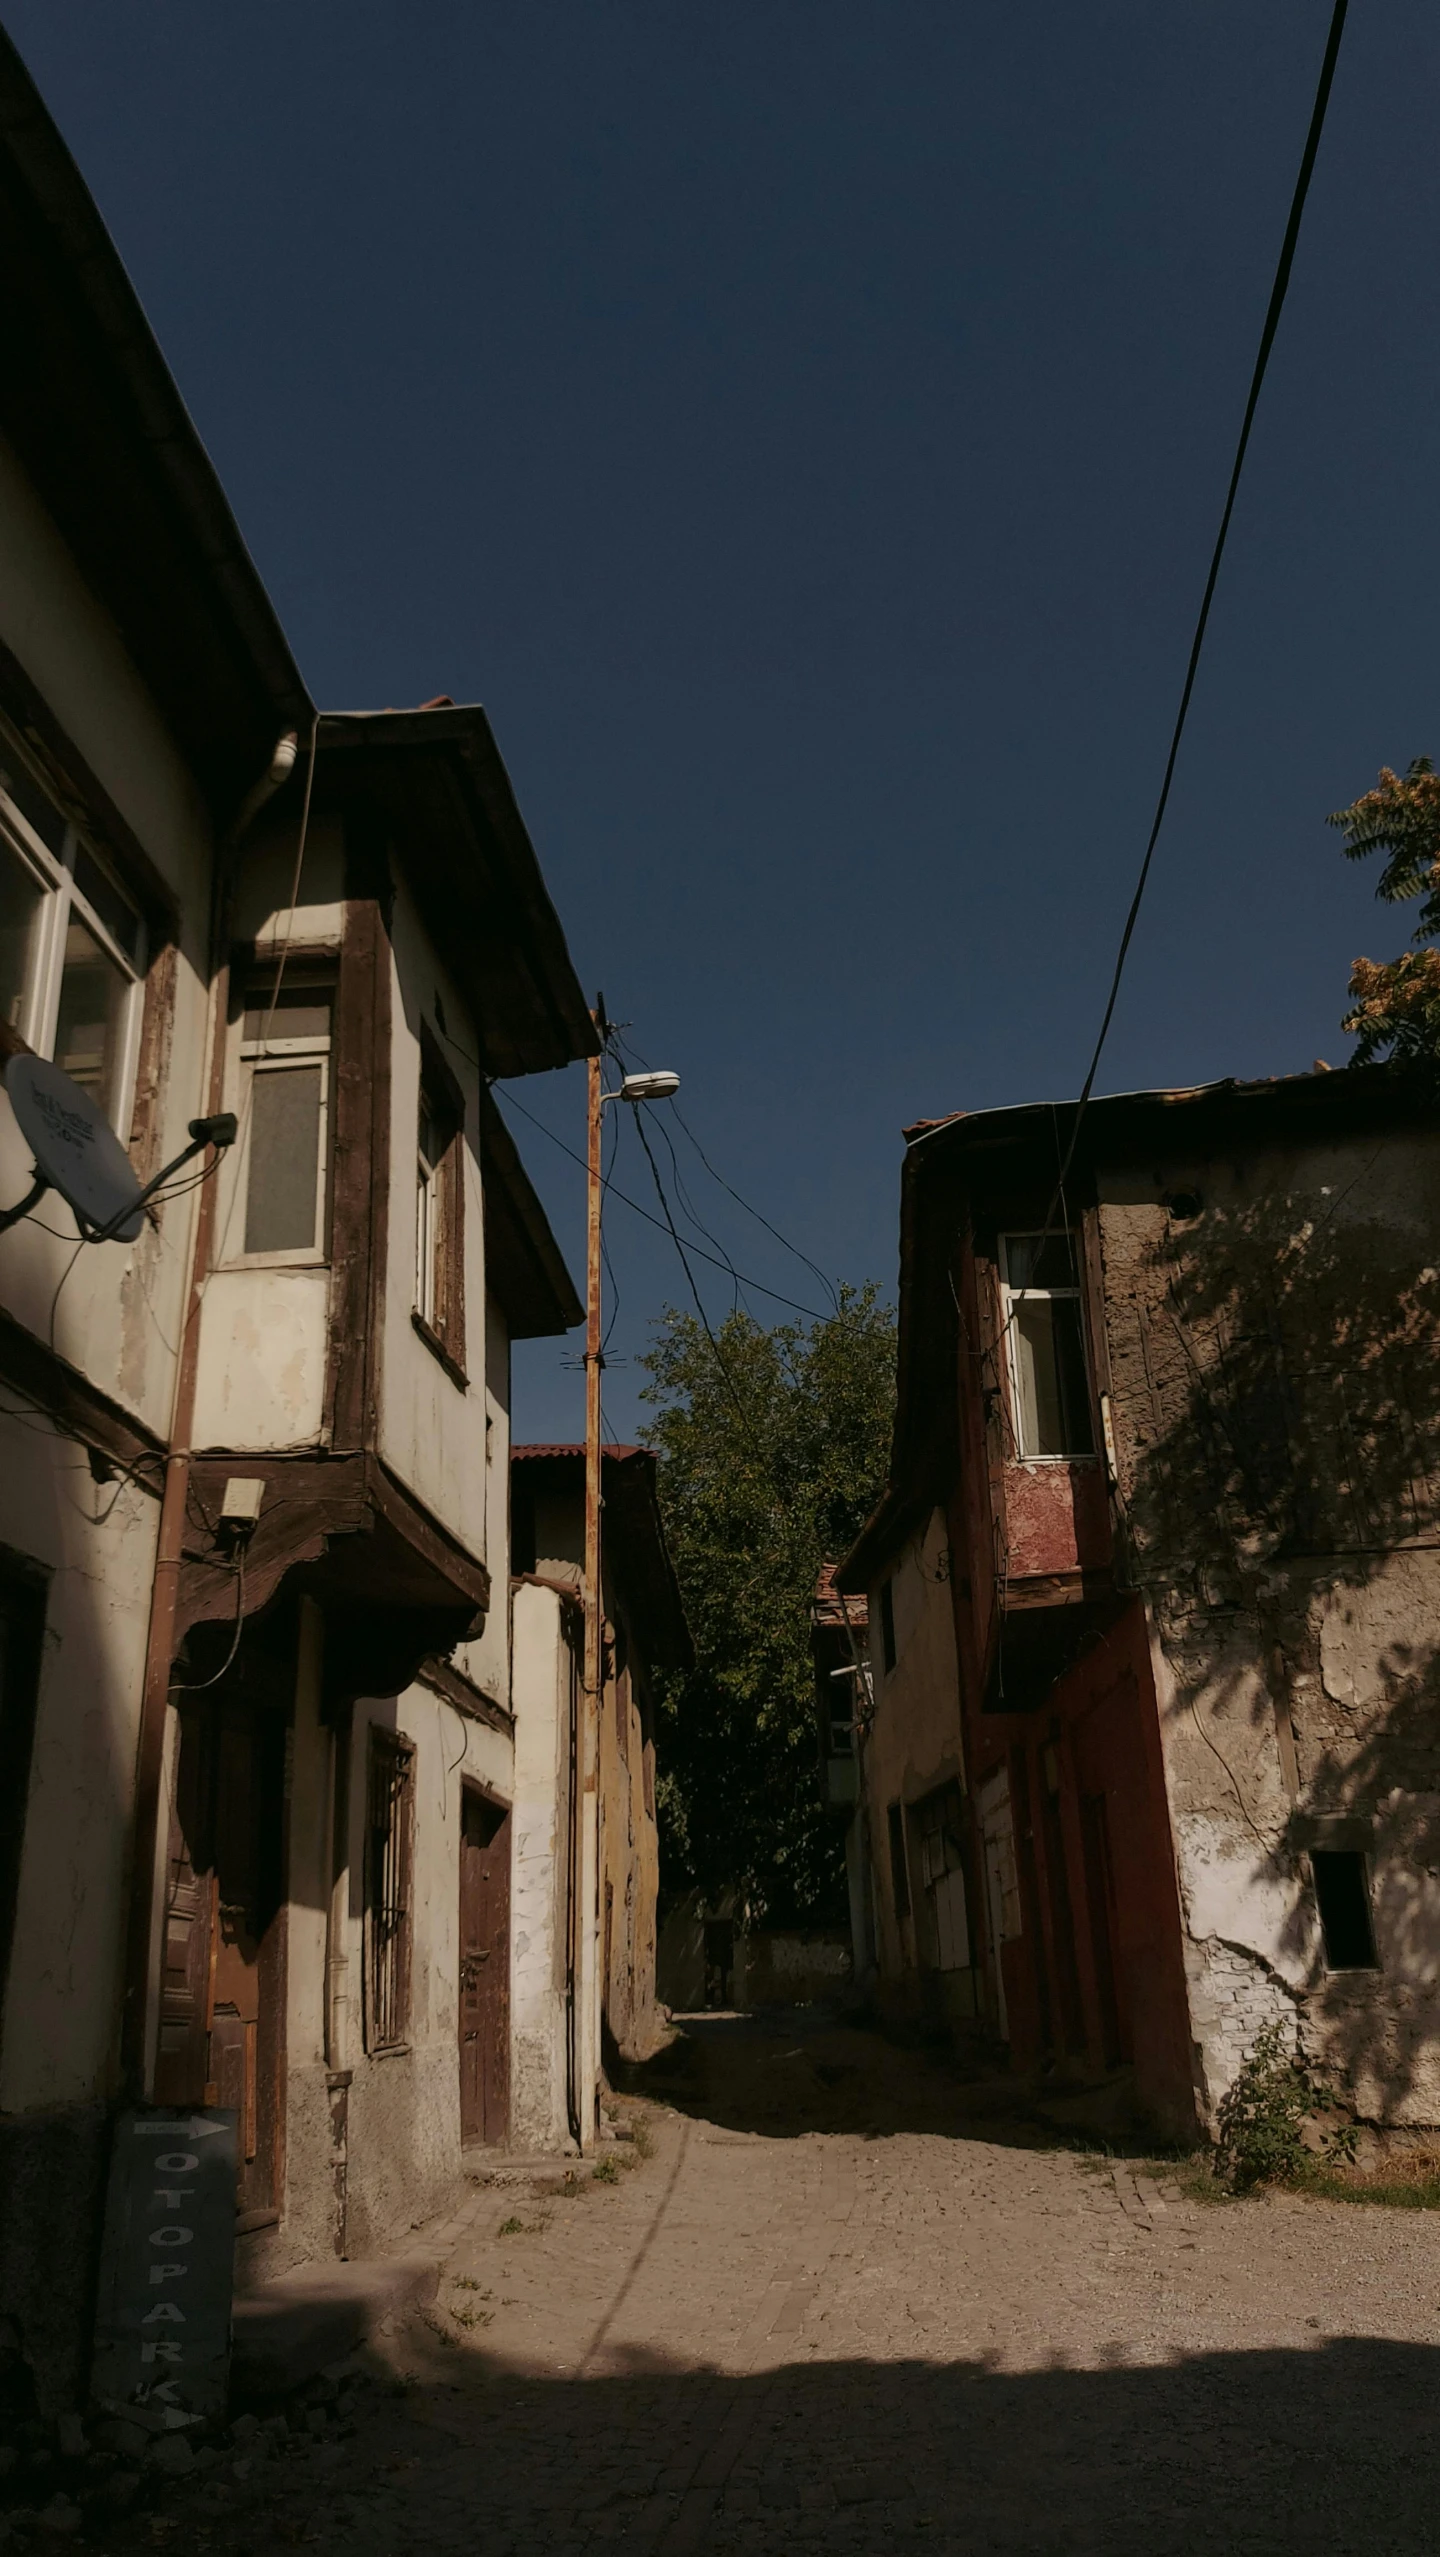 a person riding a skateboard down a street, by Attila Meszlenyi, hurufiyya, small houses, shady alleys, 8k 28mm cinematic photo, turkey